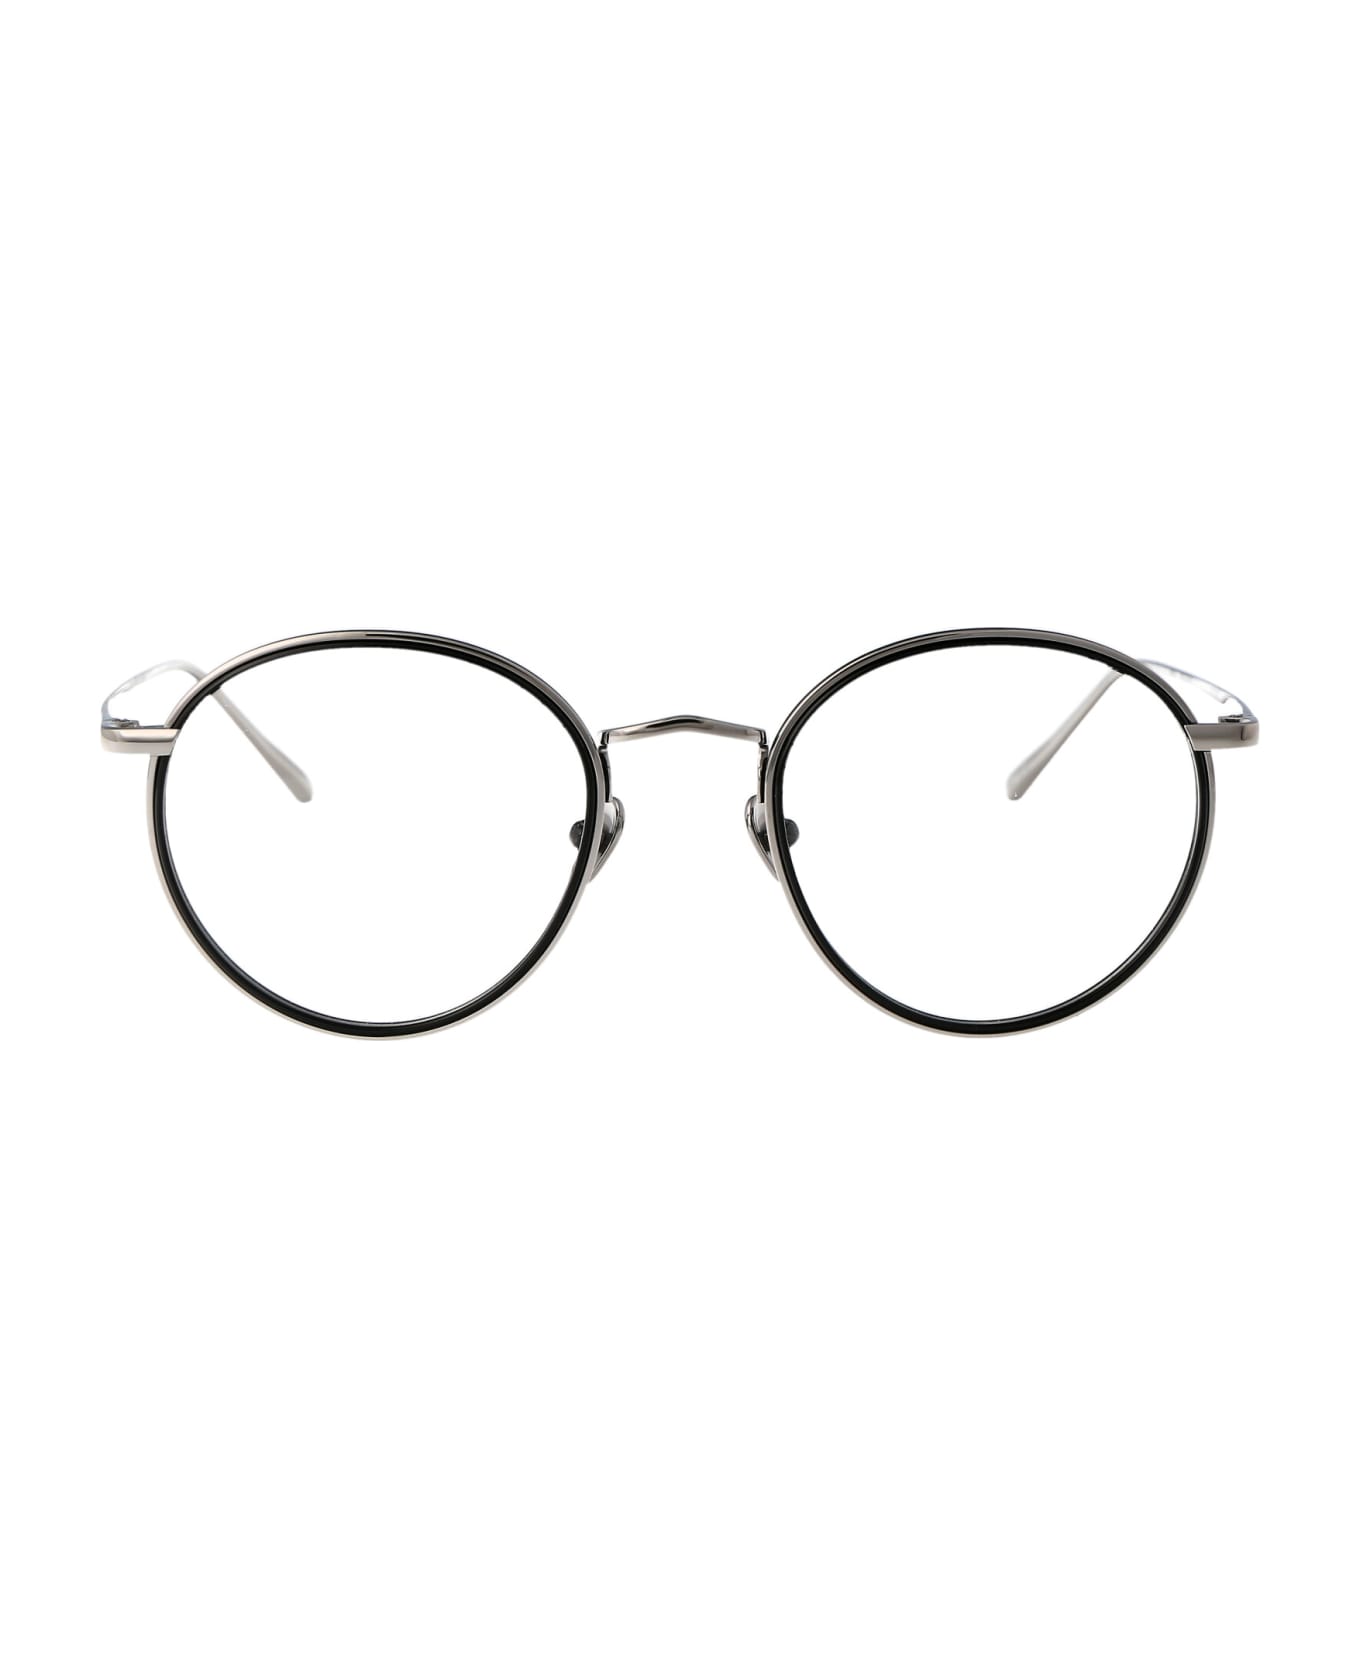 Linda Farrow Comer Glasses - WHITEGOLD/BLACK/OPTICAL